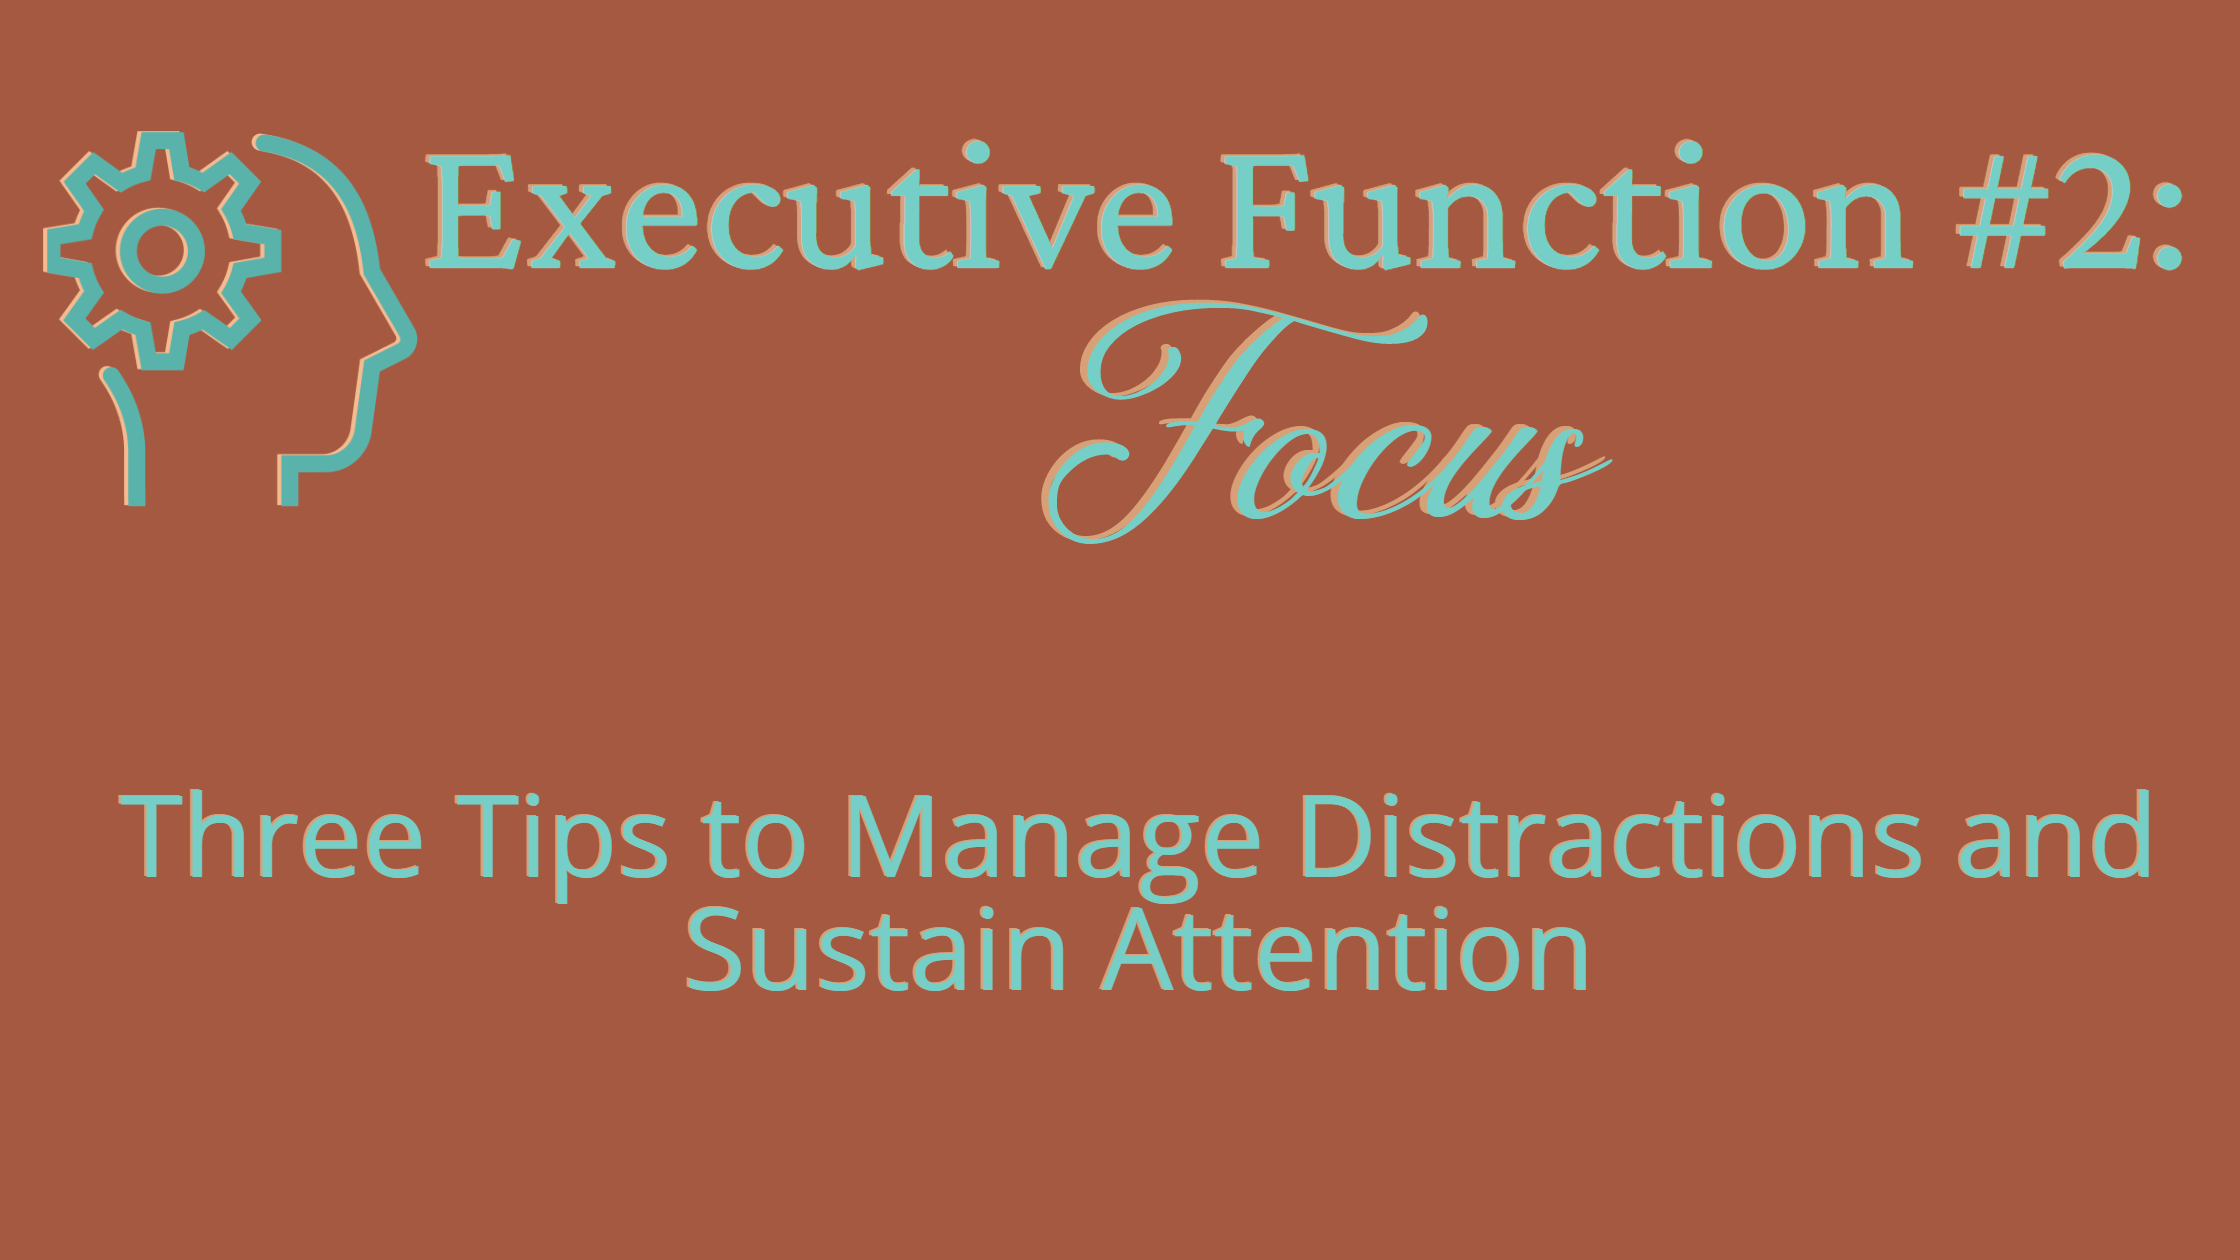 Executive Function #2 Focus